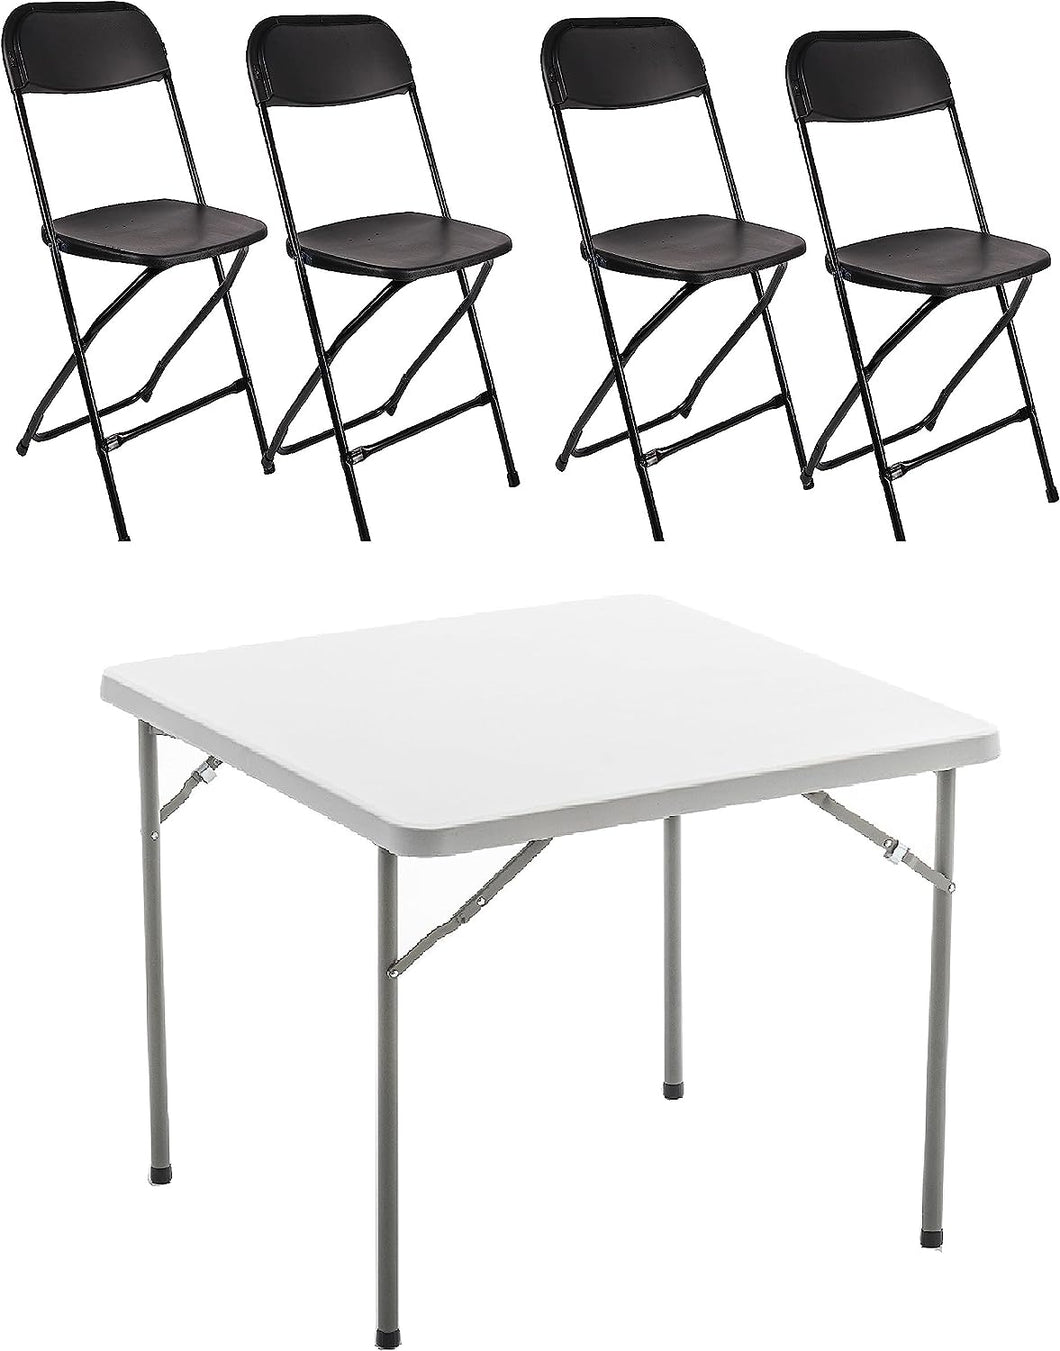 BTExpert 5 Piece Folding Card Table Portable & Chair Set, 34